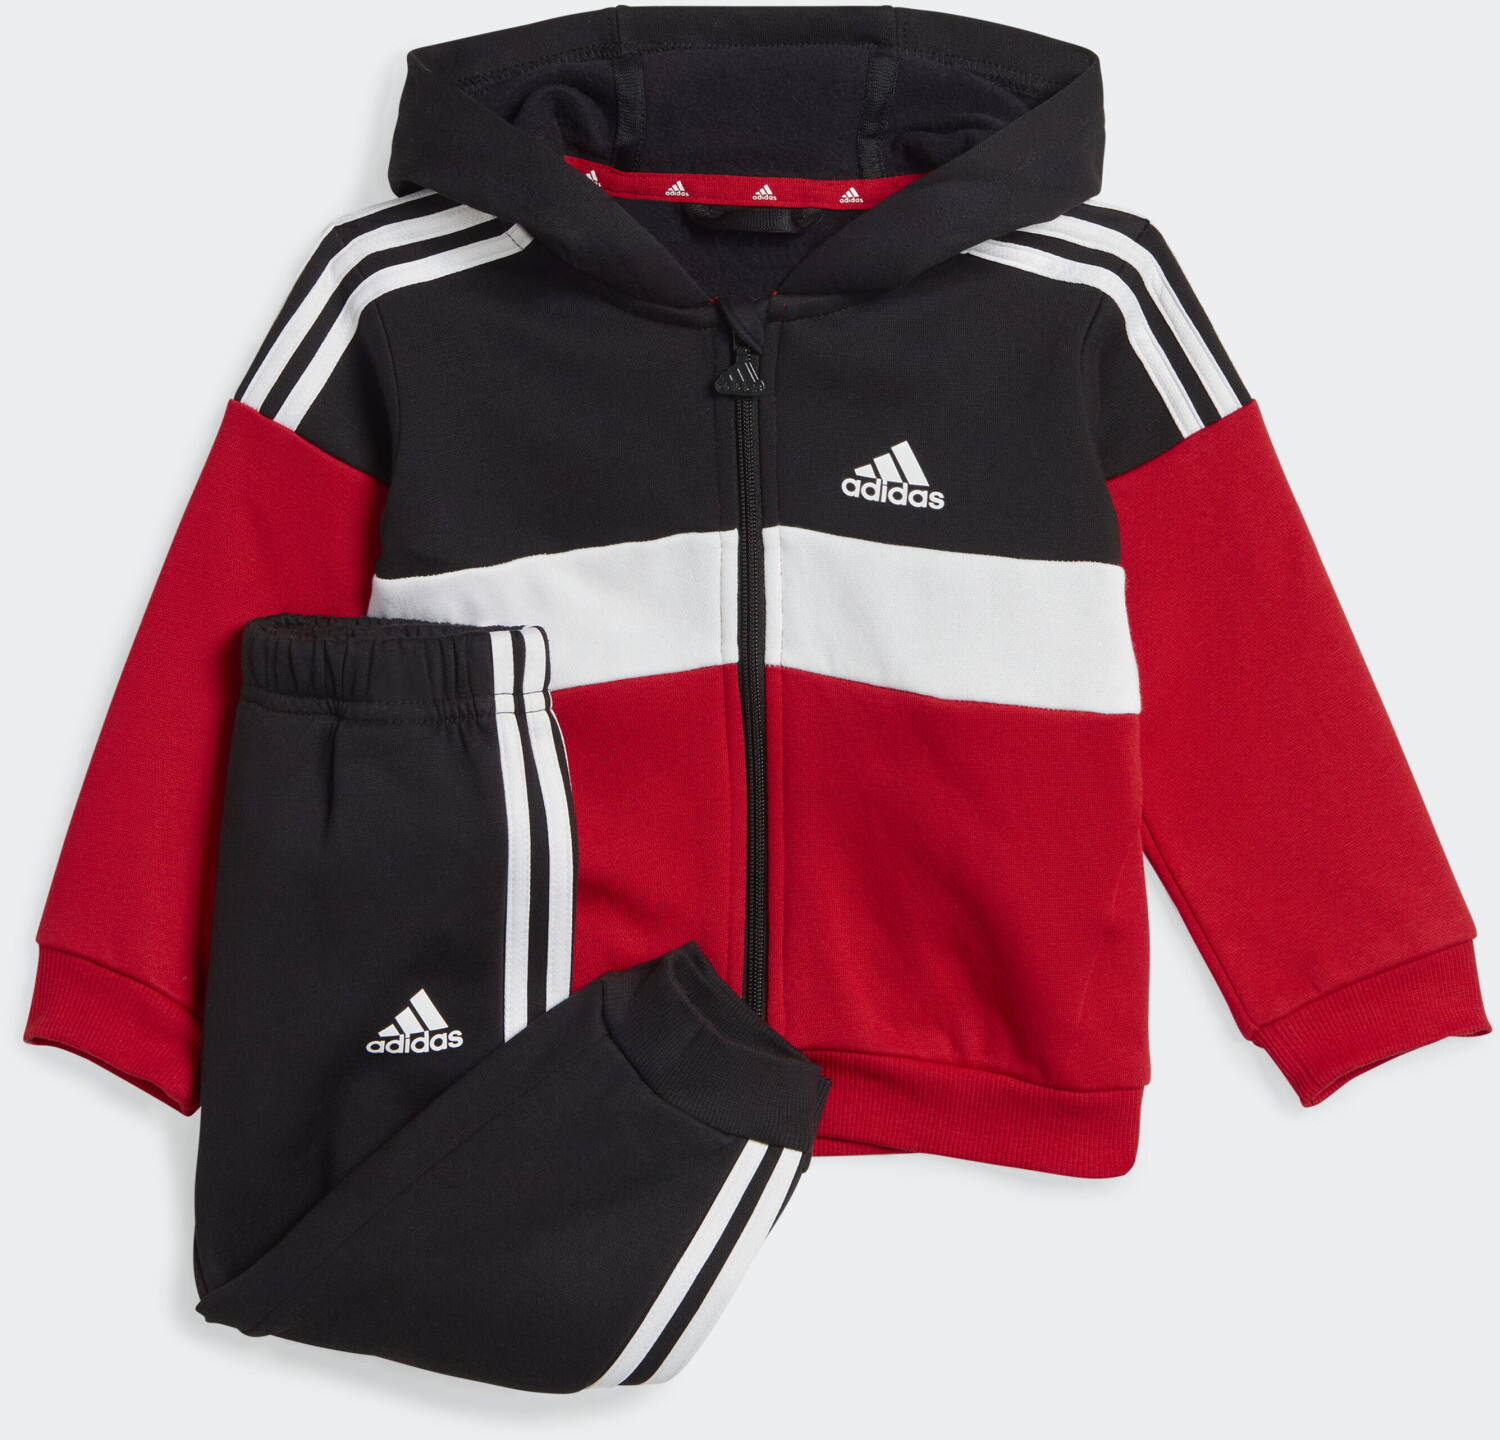 Adidas Kids Tiberio 3-Stripes Colorblock ab (IJ6324) bei Suit 35,00 Preisvergleich | Kids Track € scarlet black/white/better